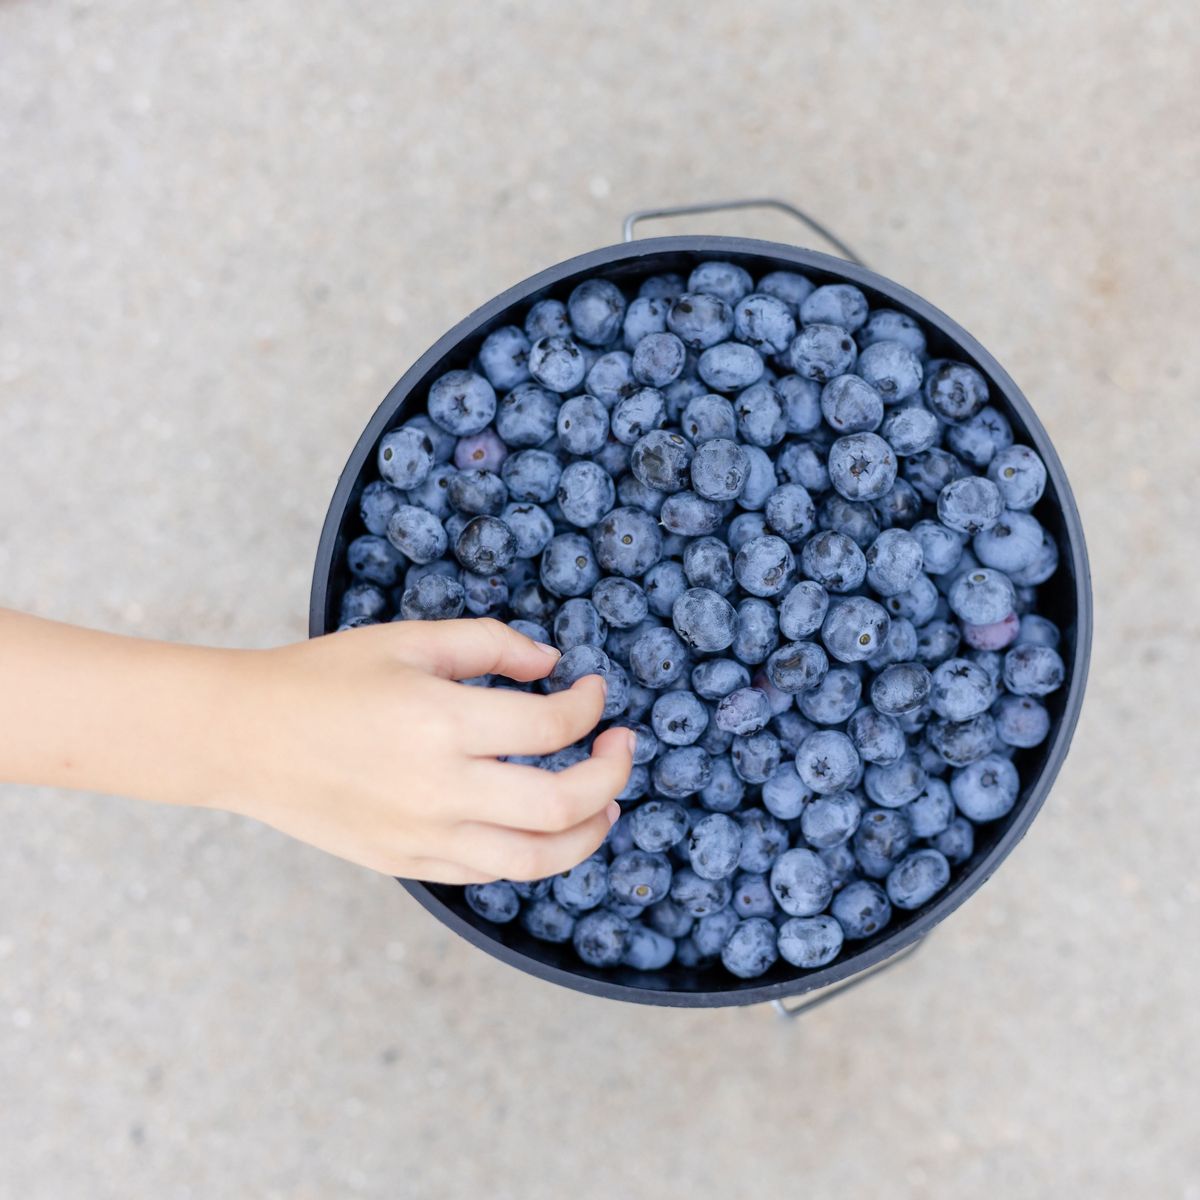 U-Pick Blueberry Picking